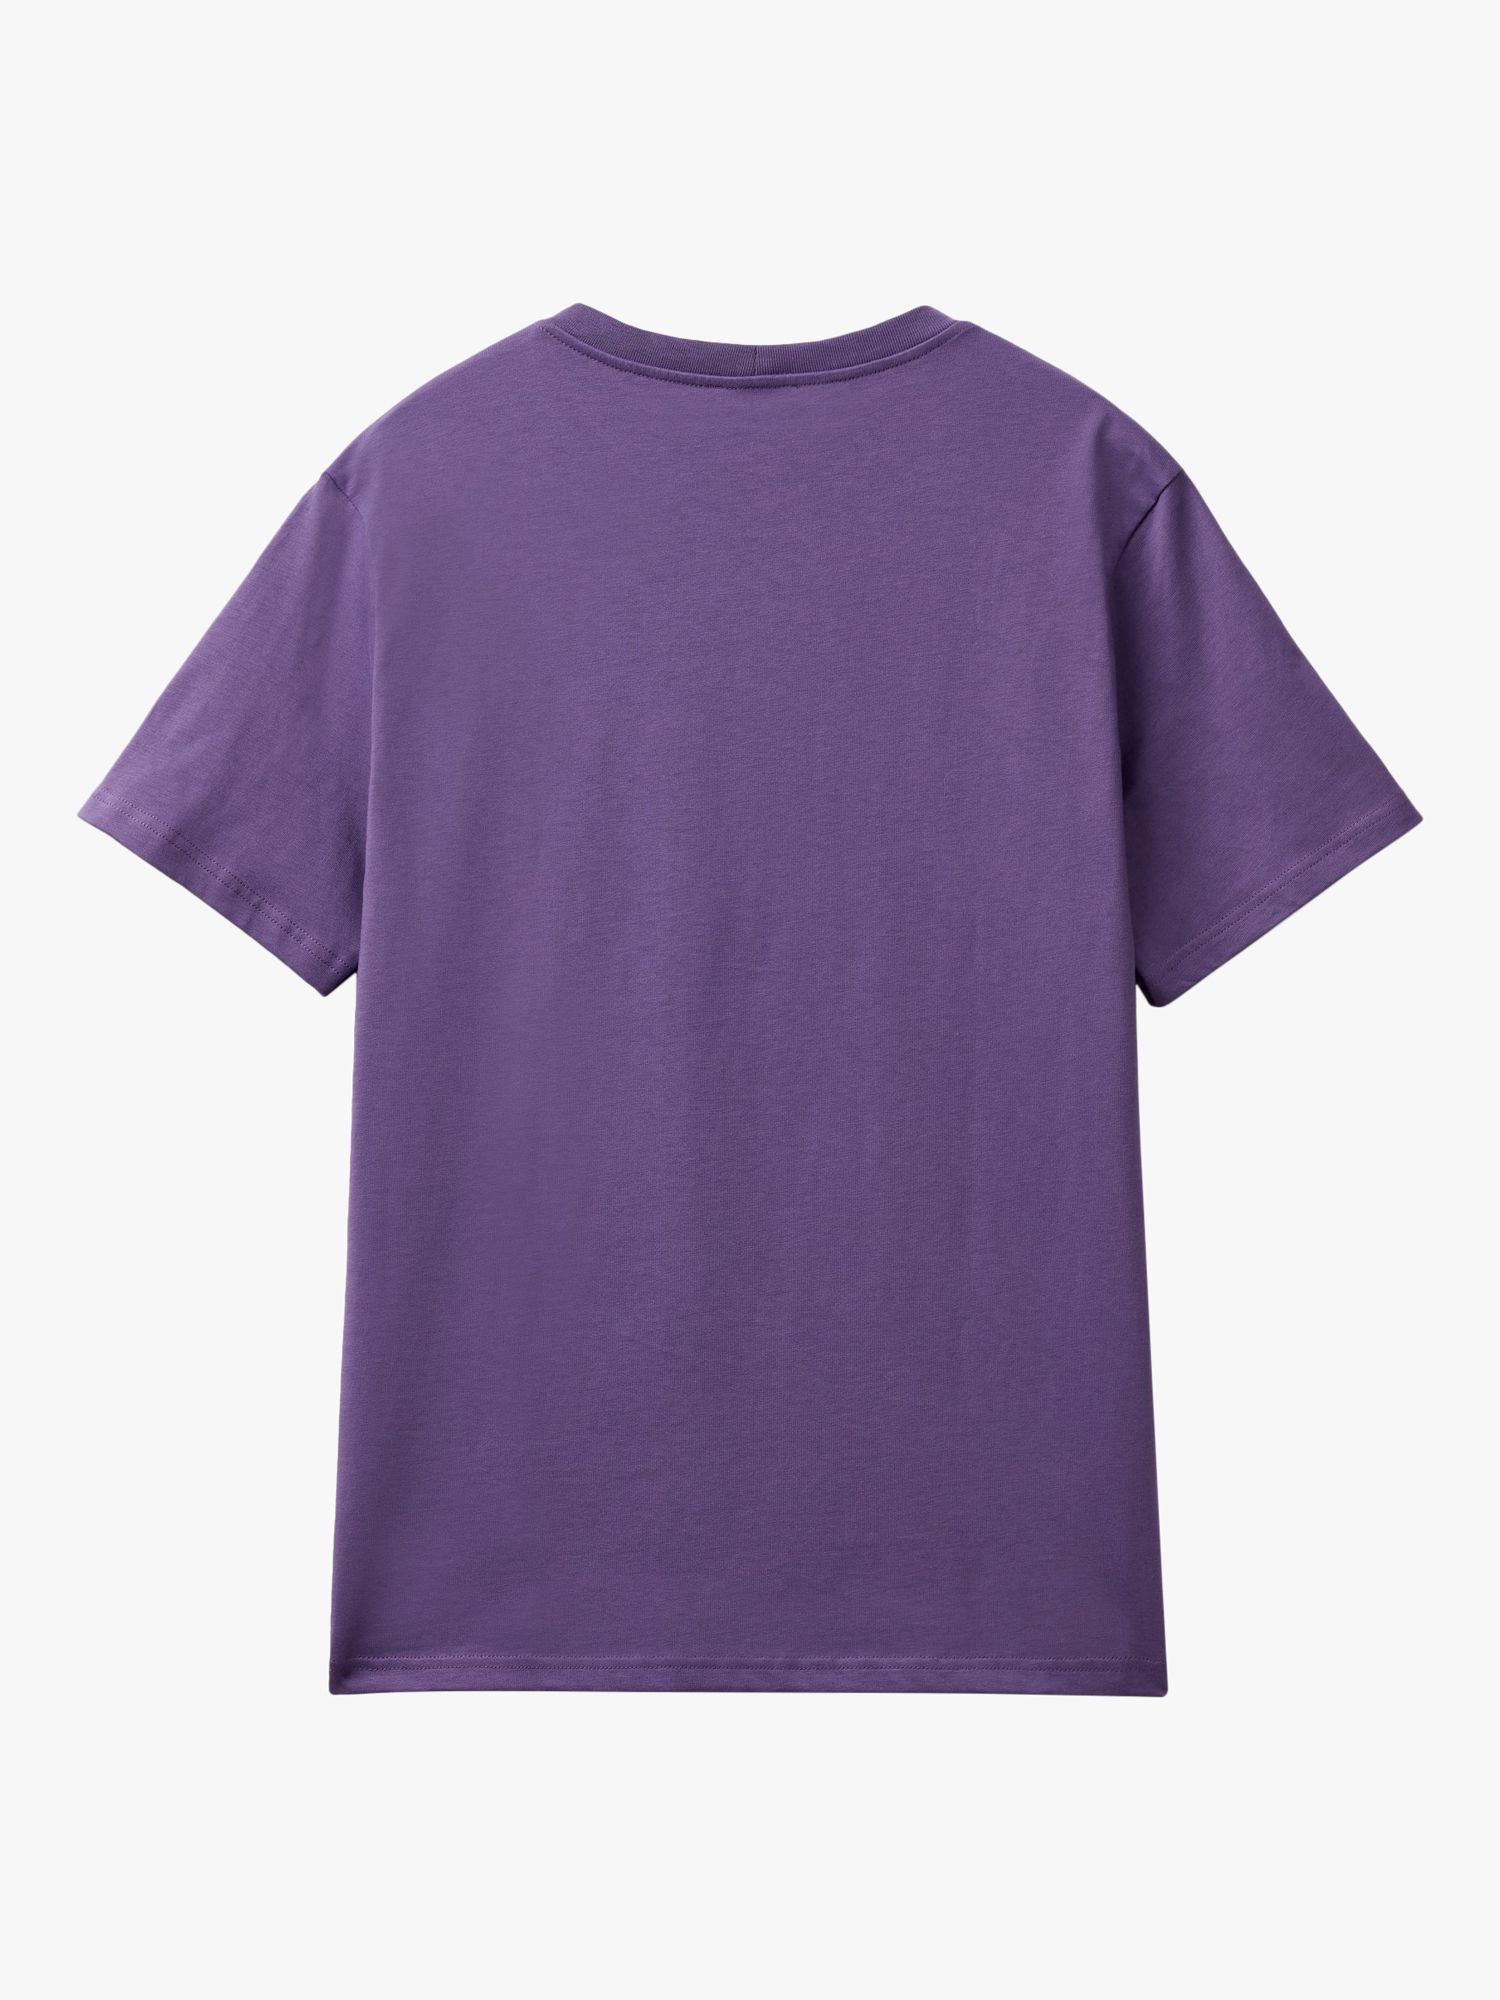 Benetton Short Sleeve T-Shirt, Violet, S